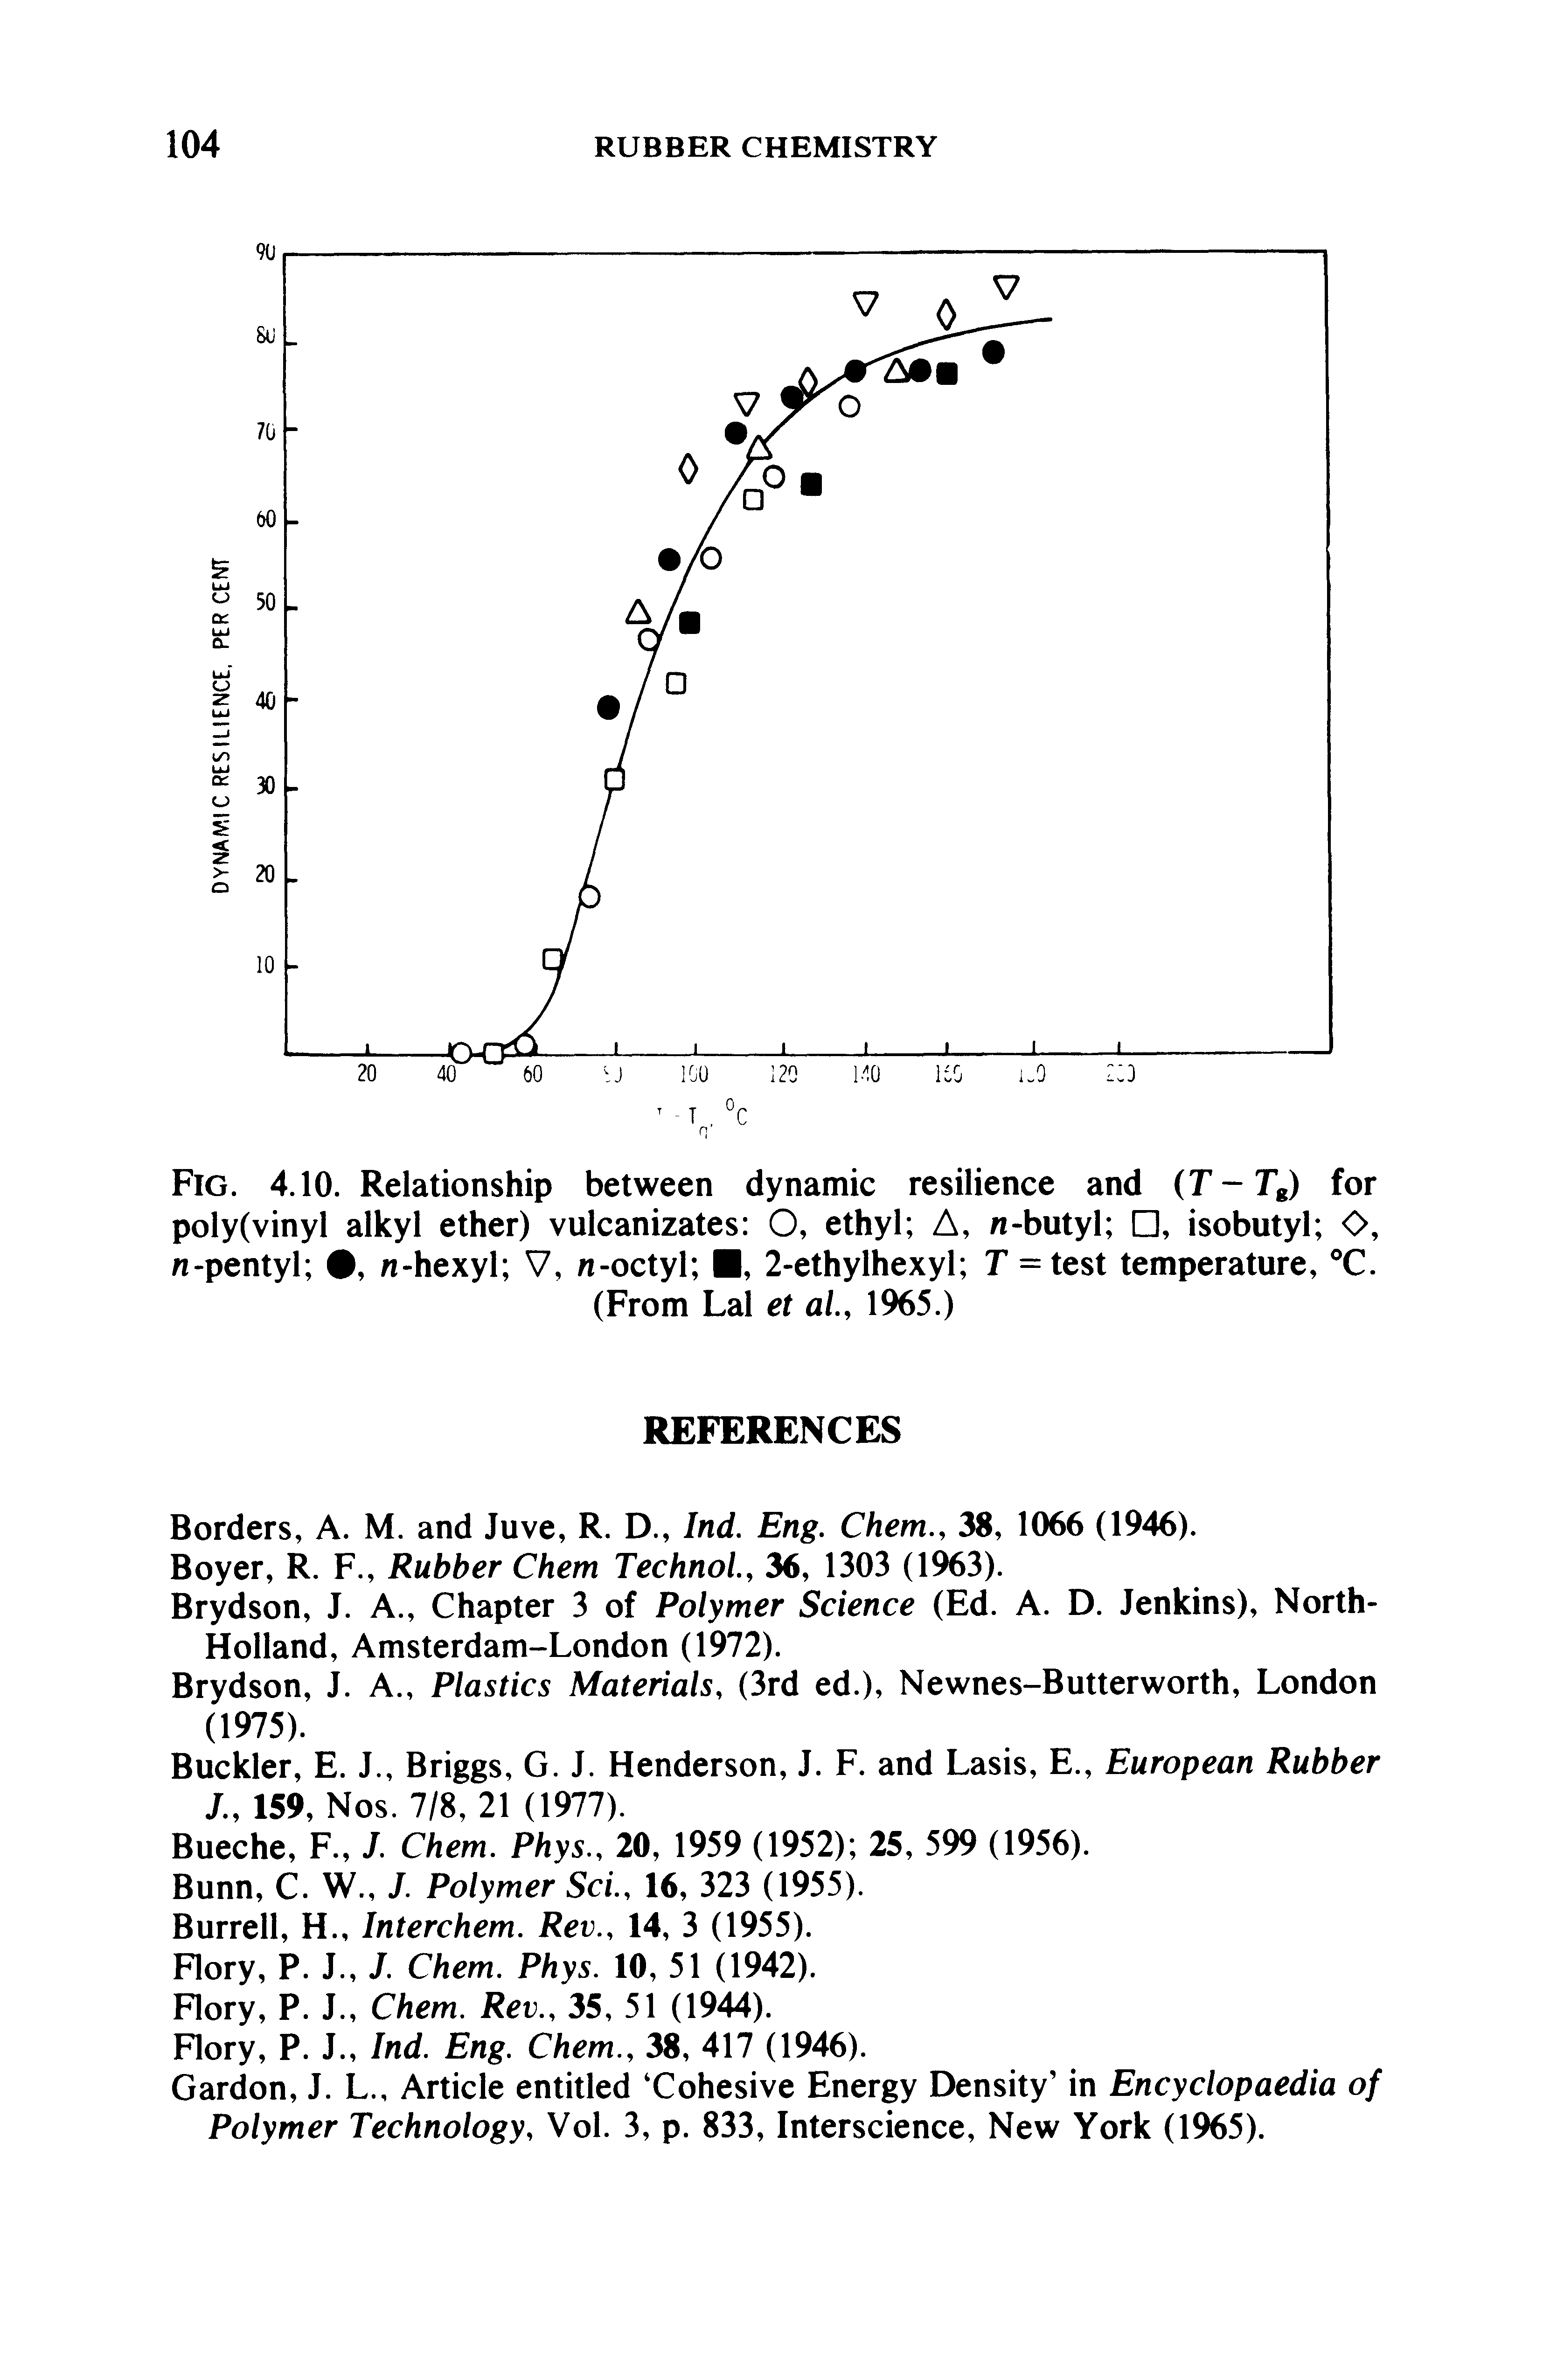 Fig. 4.10. Relationship between dynamic resilience and (T-Tg) for poly (vinyl alkyl ether) vulcanizates O, ethyl A, n-butyl , isobutyl O, n-pentyl n-hexyl V, n-octyl , 2-ethylhexyl T = test temperature, T.